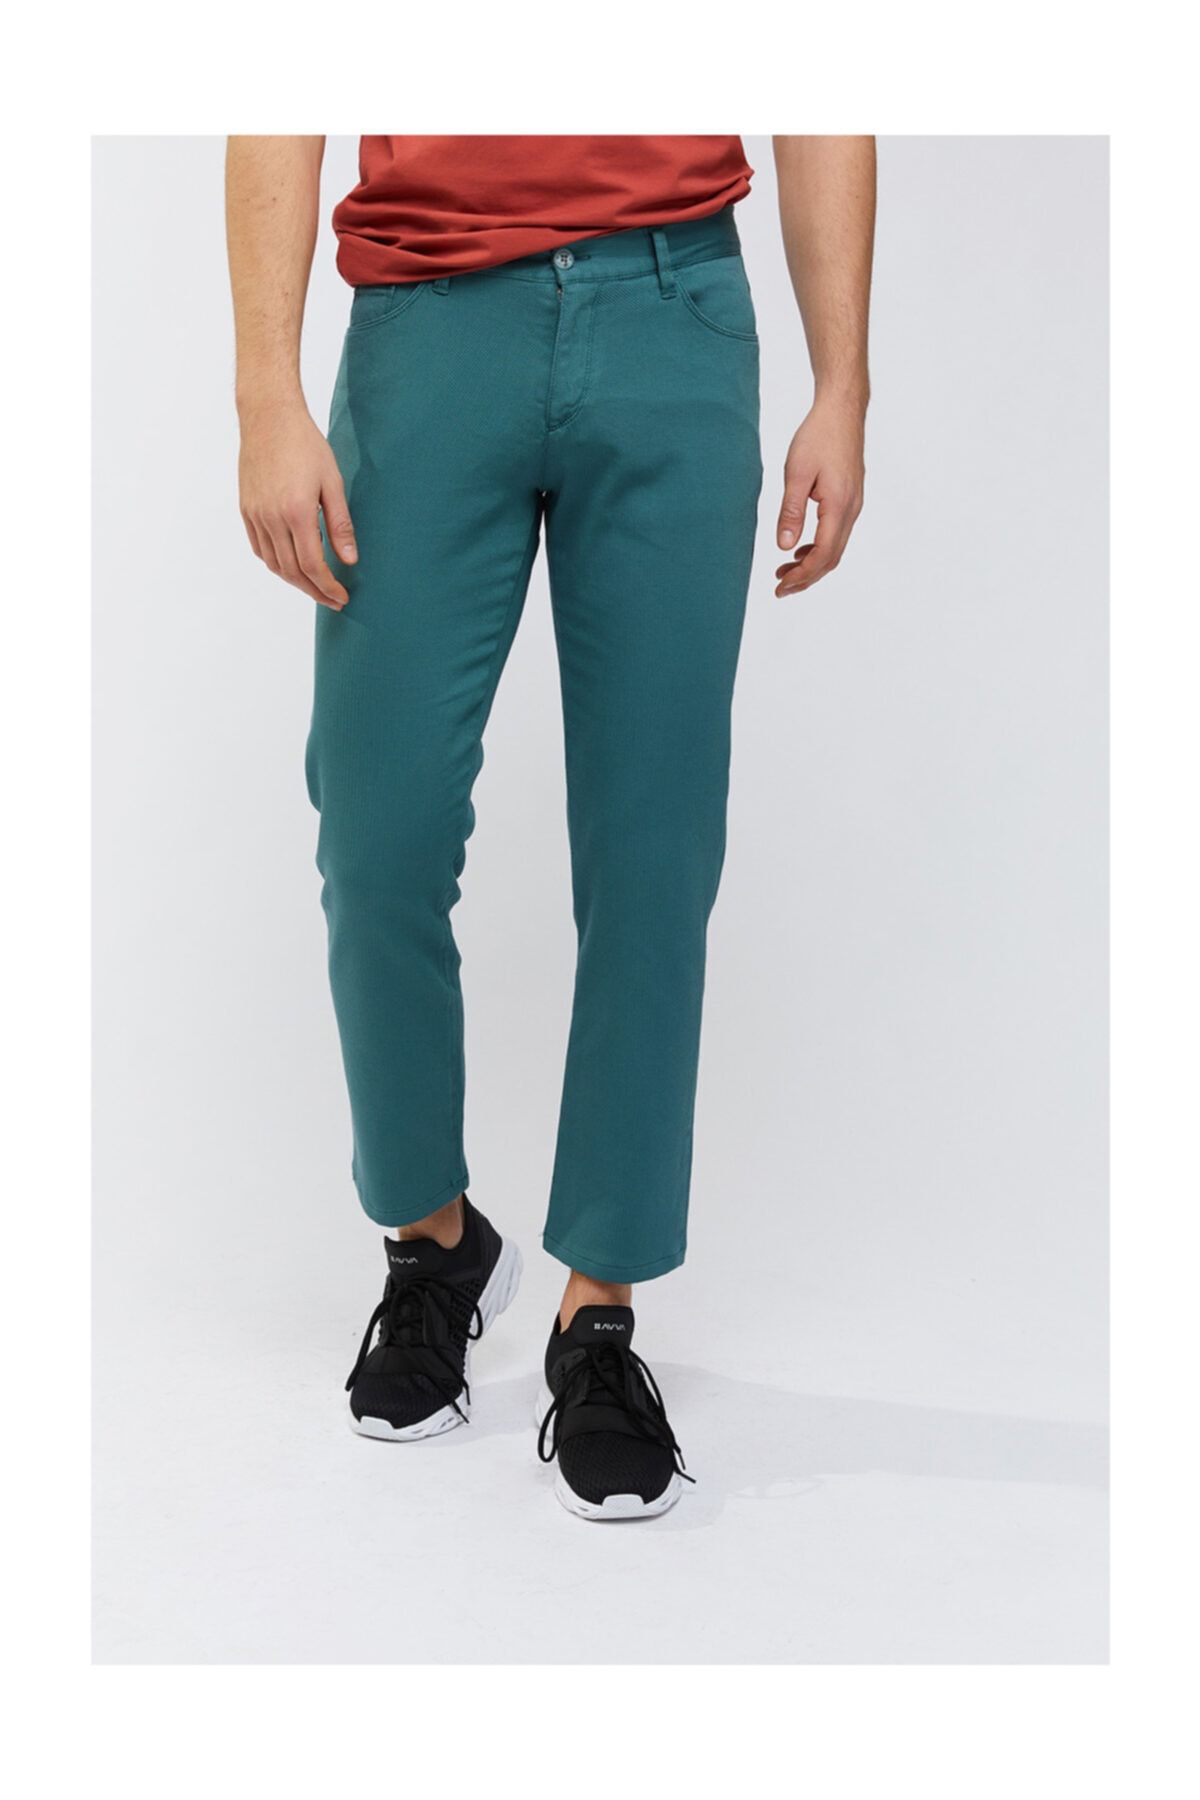 Avva Erkek Yeşil 5 Cepli Armürlü Slim Fit Pantolon A91y3016